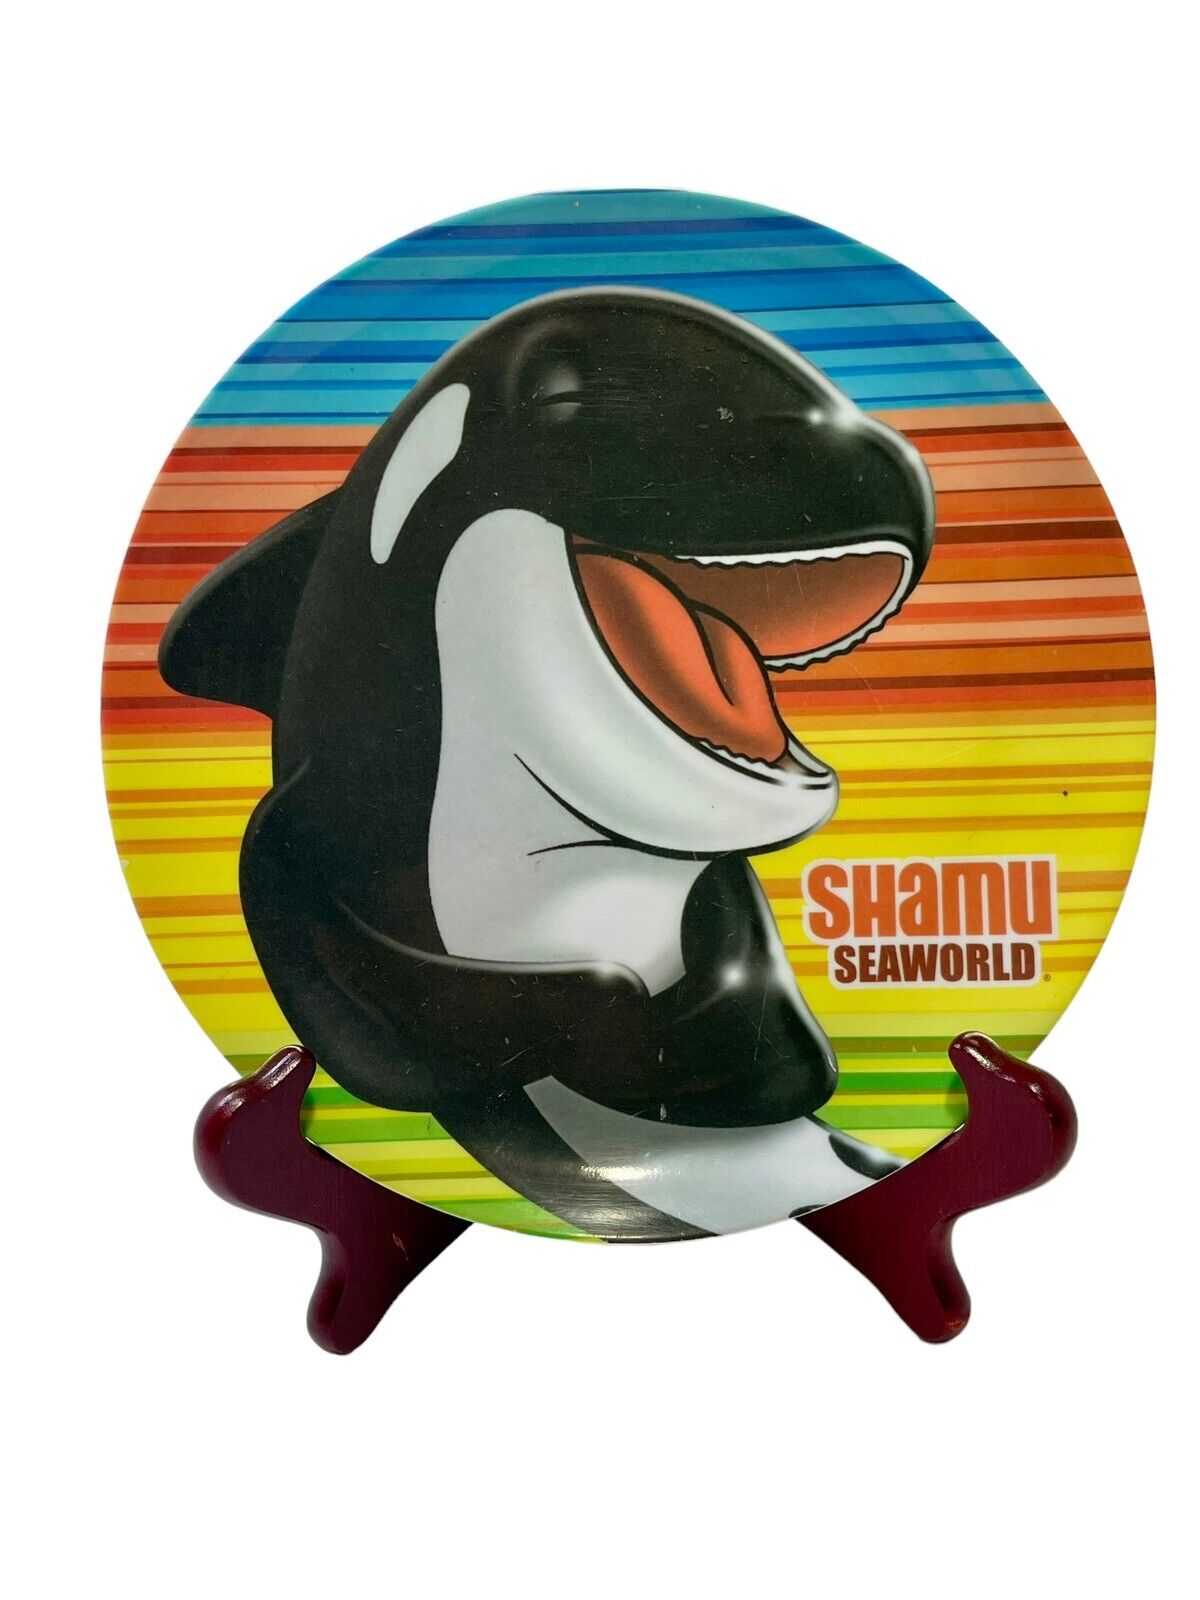 Vintage Sea world Shamu The Whale souvenir Plastic Plate 7 Inches